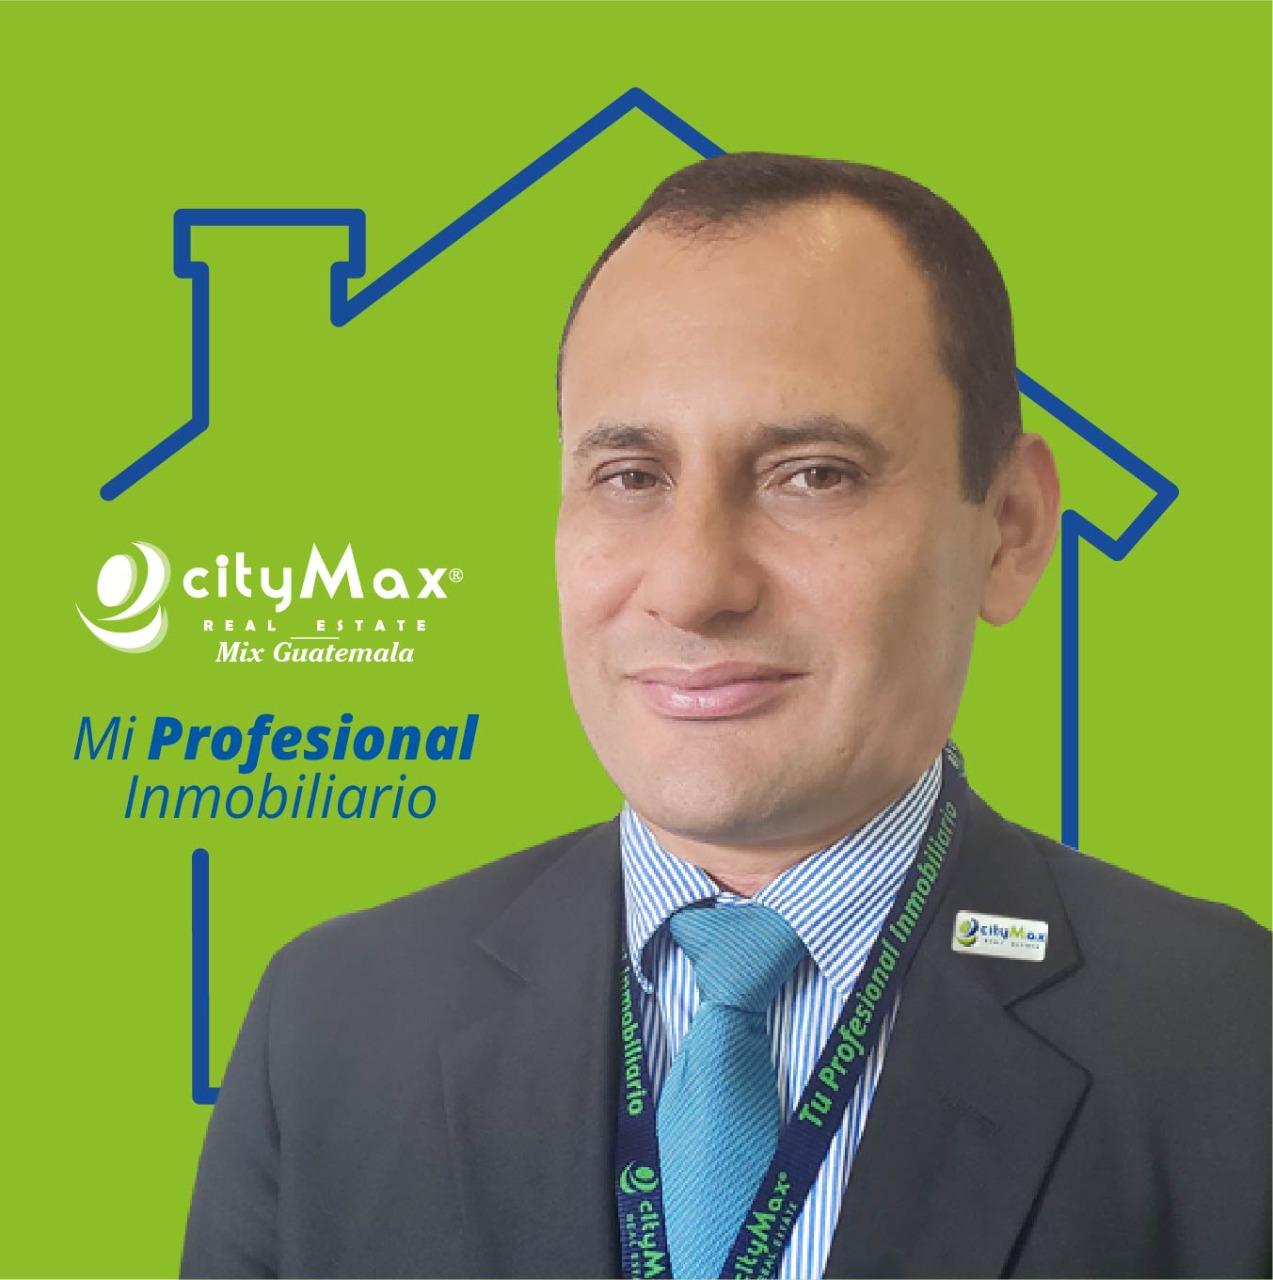 Citymax-mix